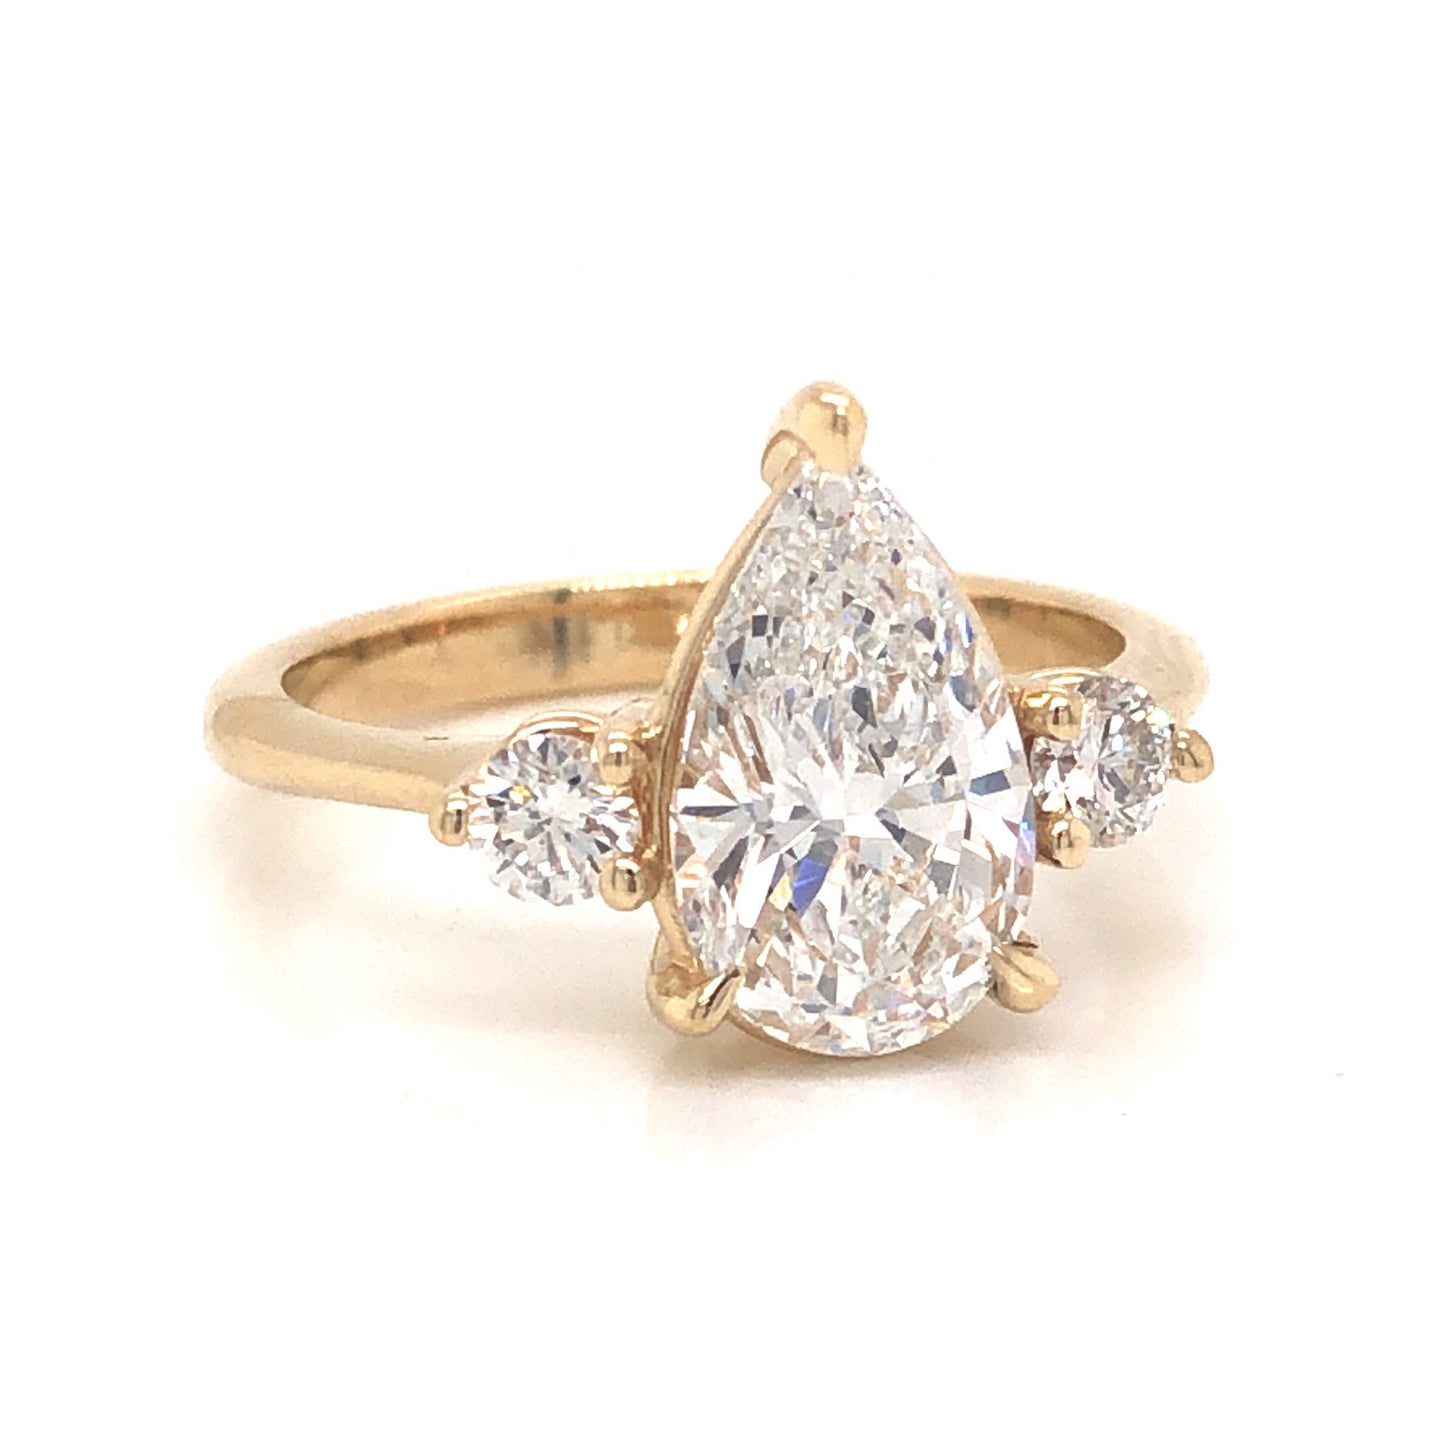 2 Carat Pear Cut Diamond Engagement Ring in 14k Yellow Gold